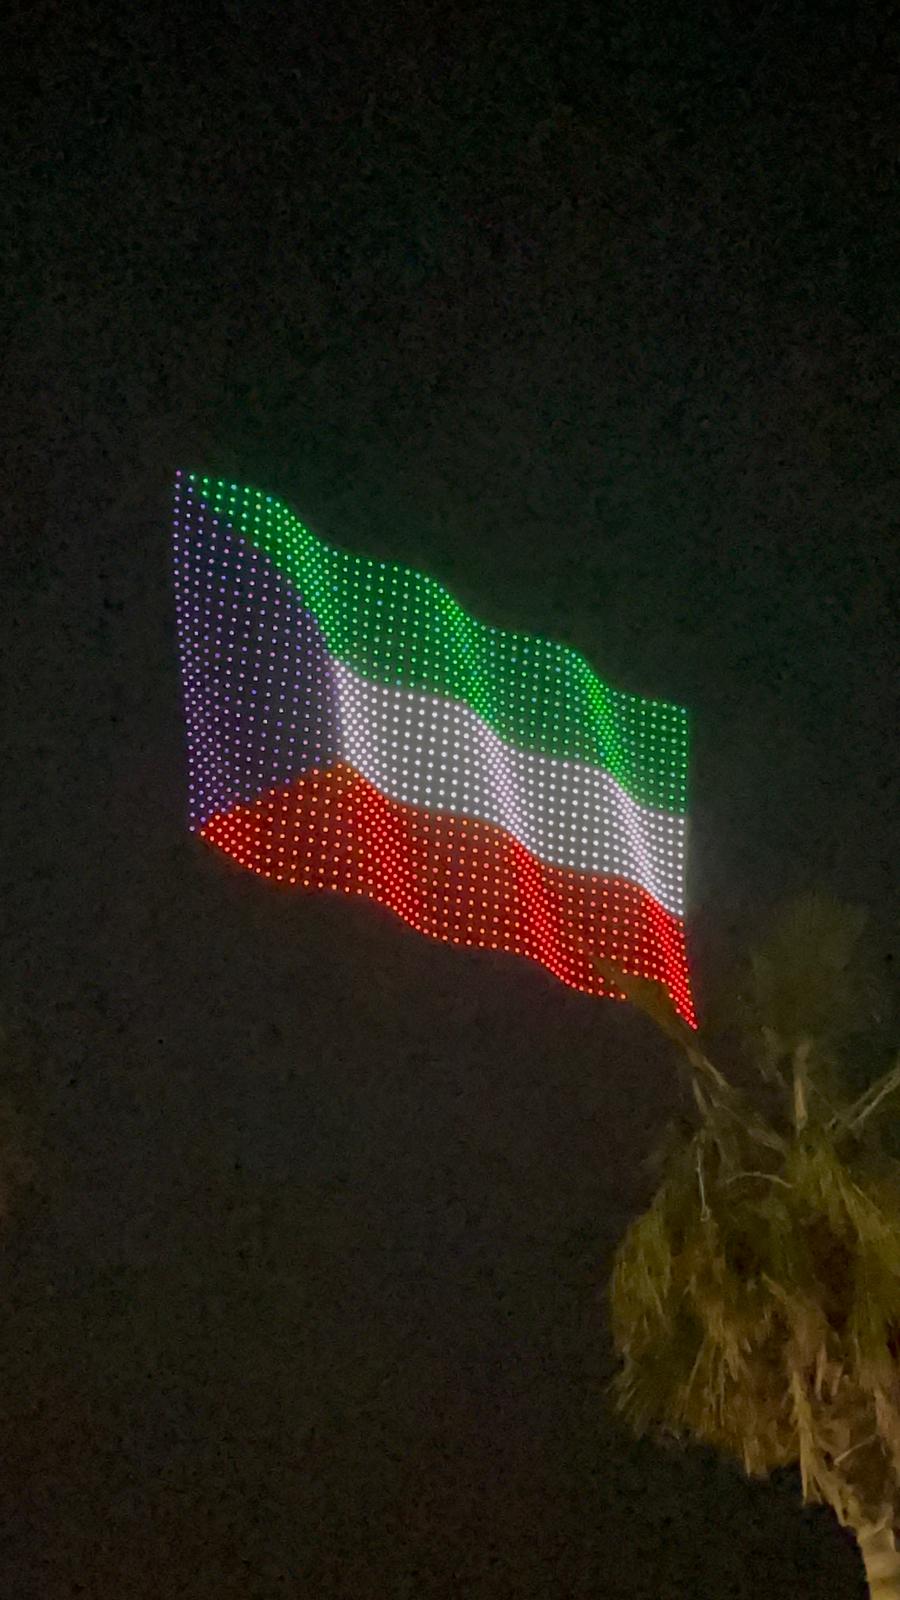 Kuwait Fireworks Show on Celebration Of National Day 2